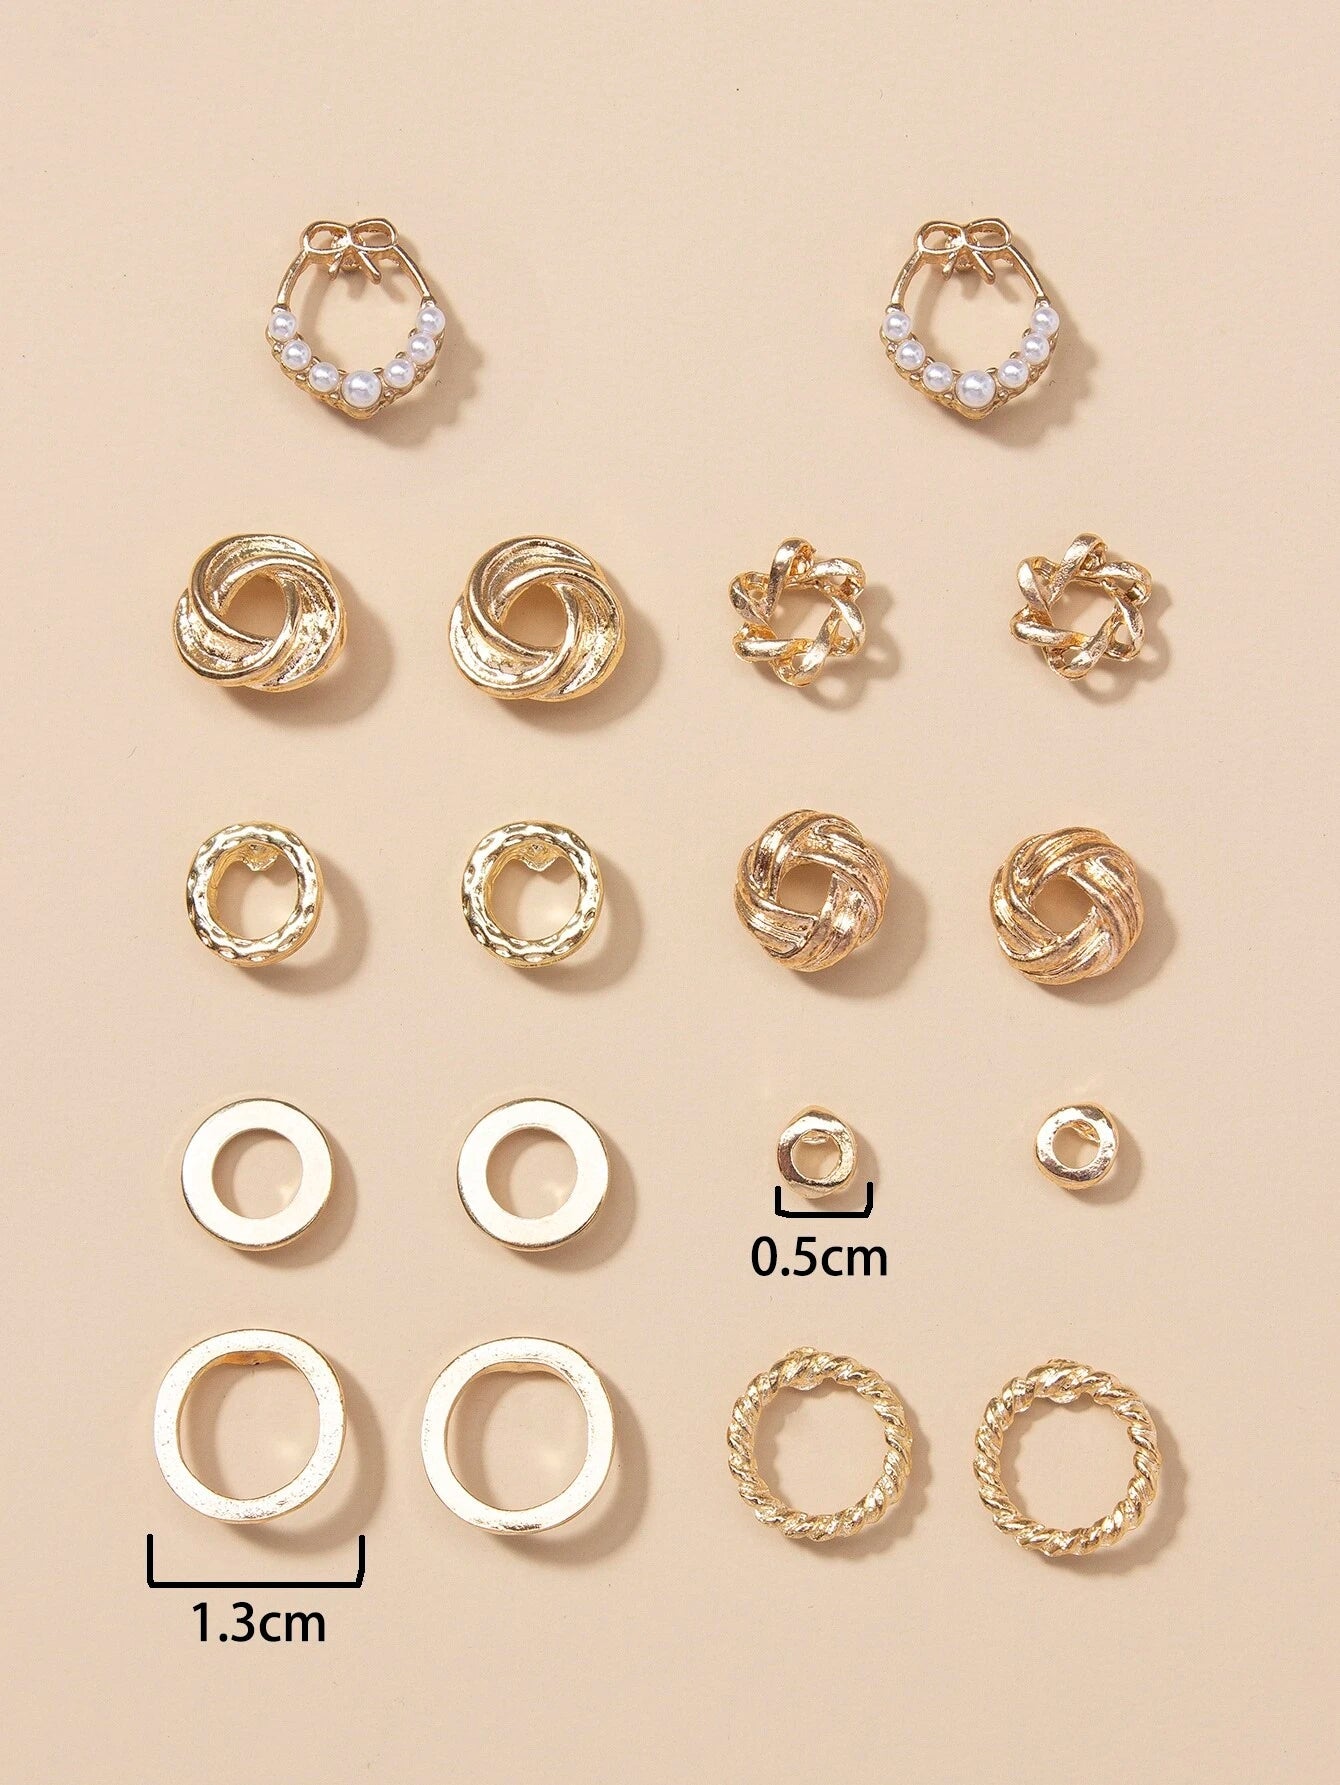  | Shein 9pairs Faux Pearl Decor Earrings | Earrings | Shein | OneHub